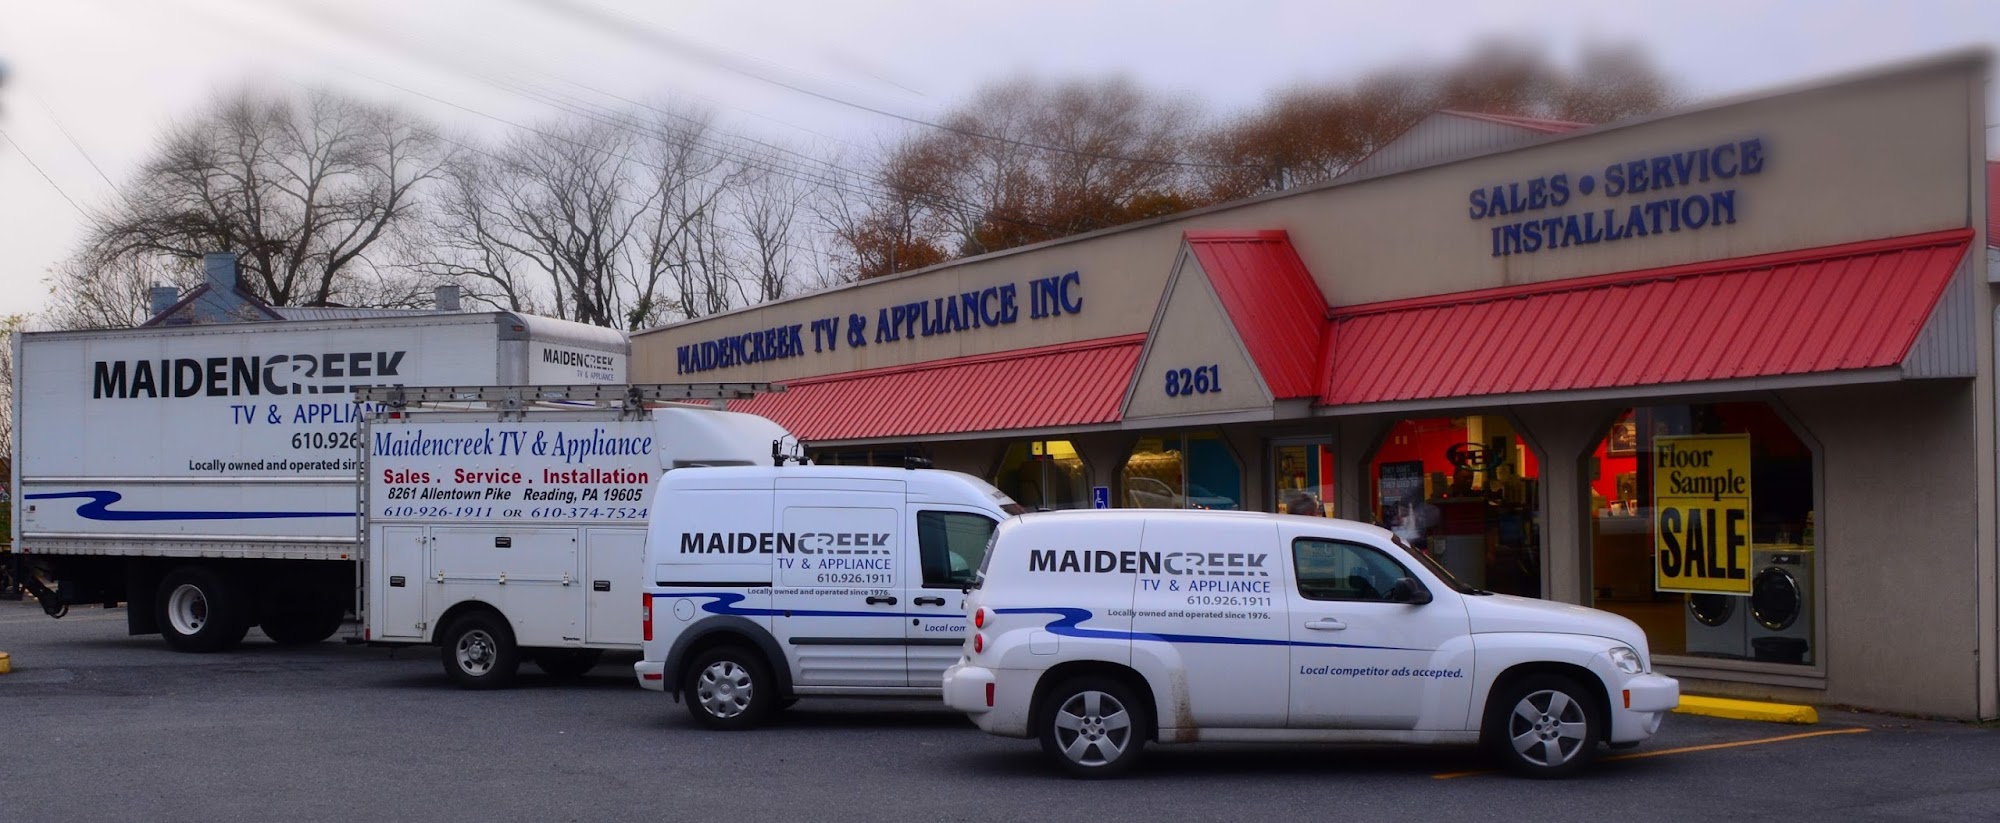 Maidencreek TV & Appliance